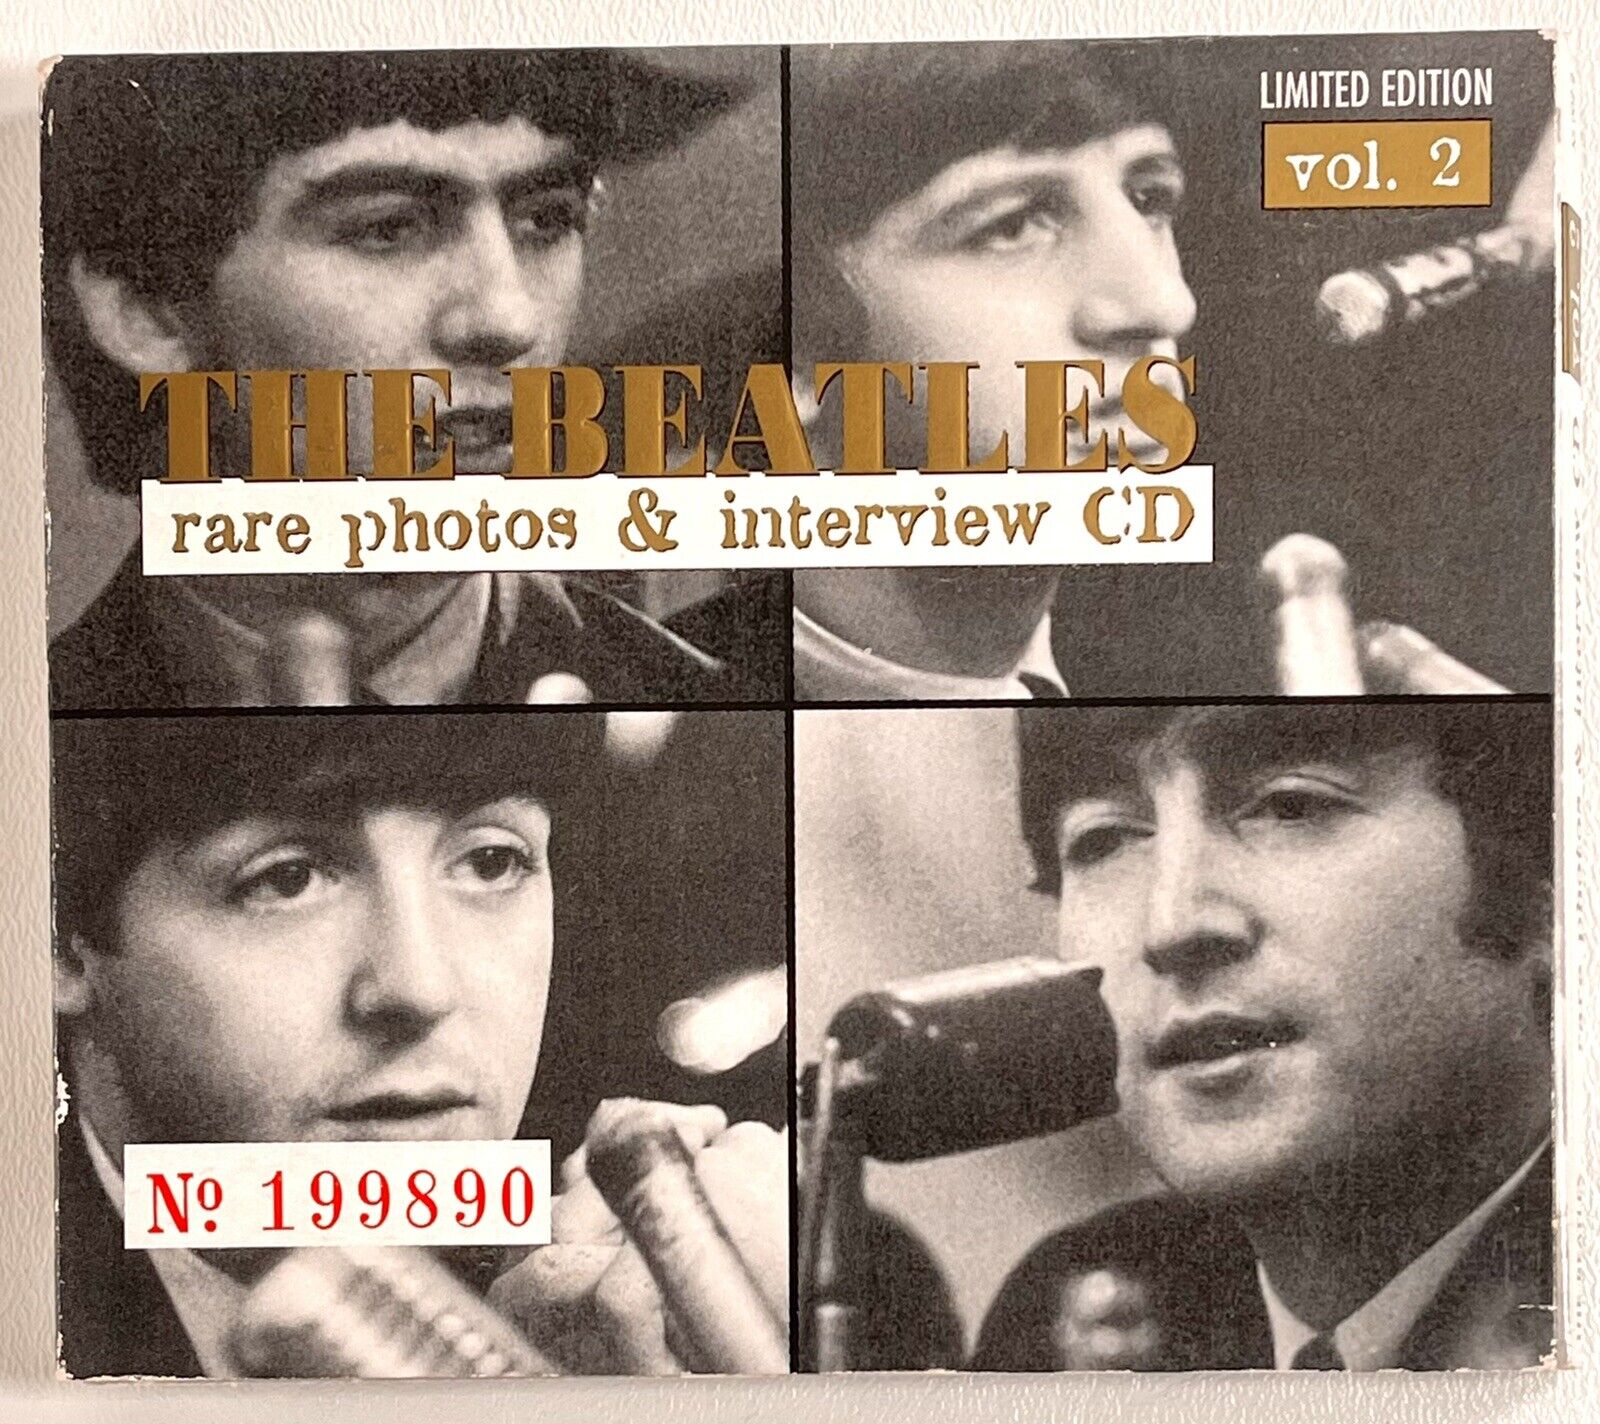 The Beatles John Lennon Limited Edition Rare Photos & Interview CD Vol. 2 1996